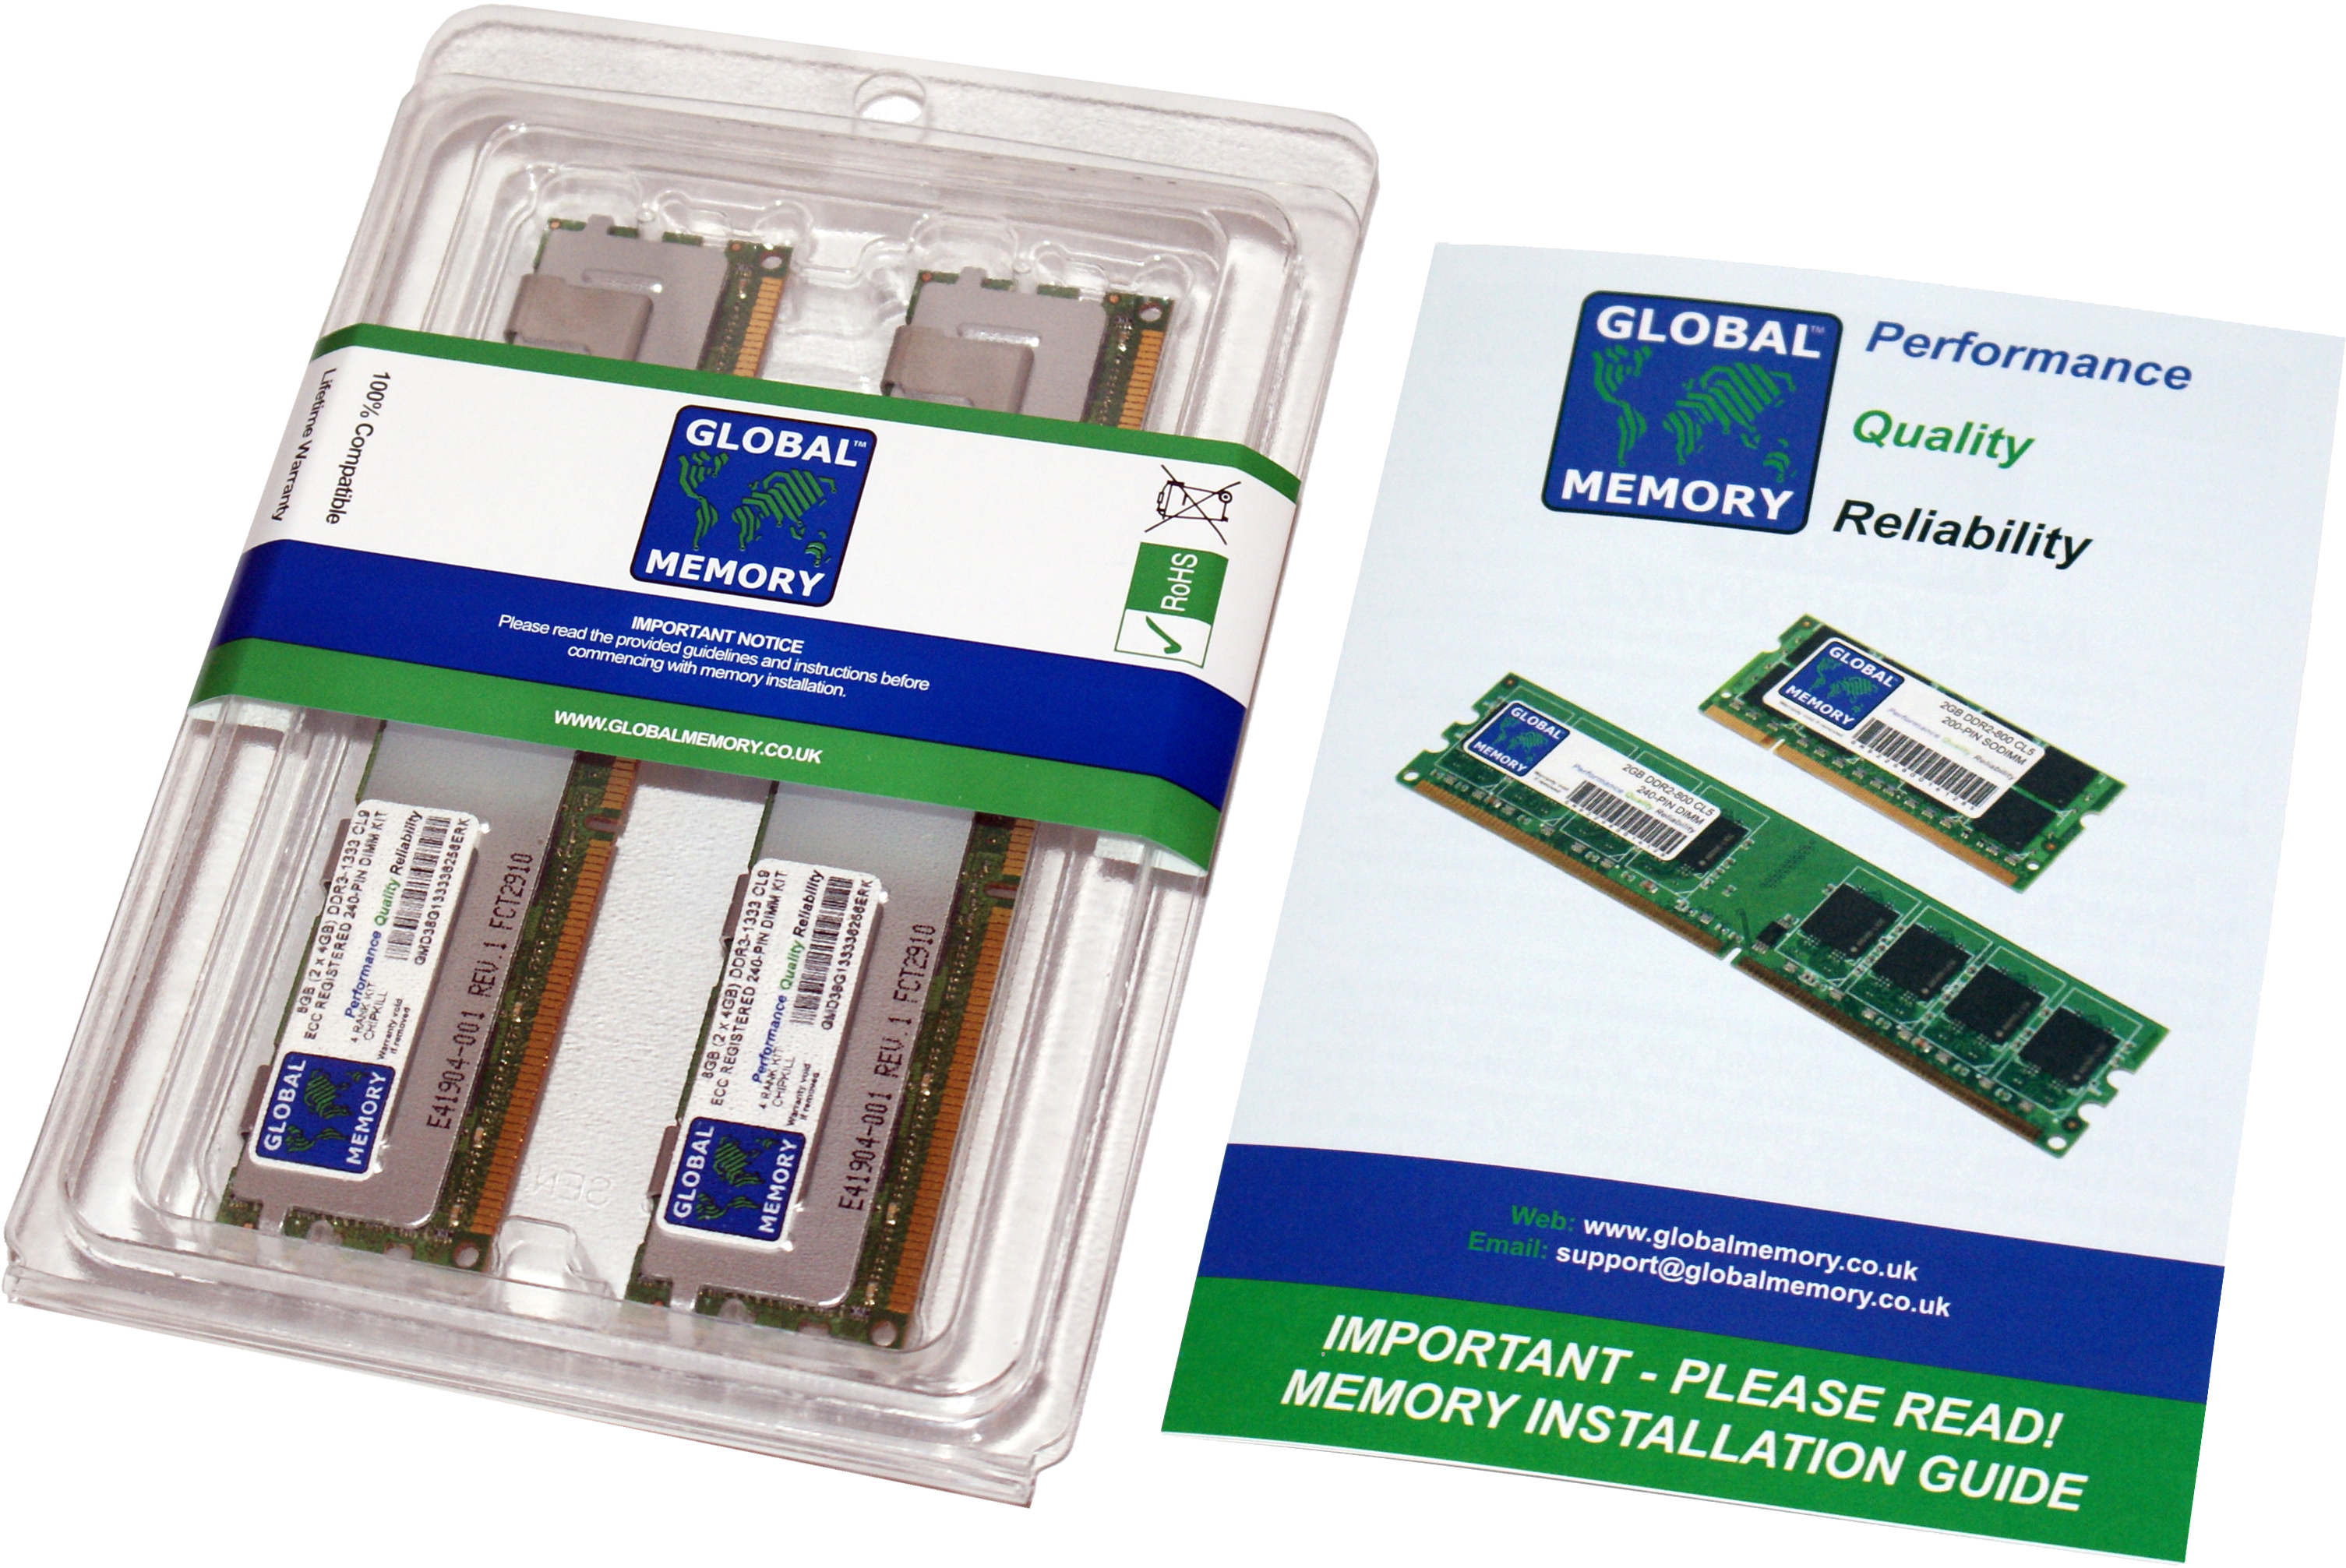 32GB (2 x 16GB) DDR3 1066MHz PC3-8500 240-PIN ECC REGISTERED DIMM (RDIMM) MEMORY RAM KIT FOR FUJITSU SERVERS/WORKSTATIONS (8 RANK KIT NON-CHIPKILL)